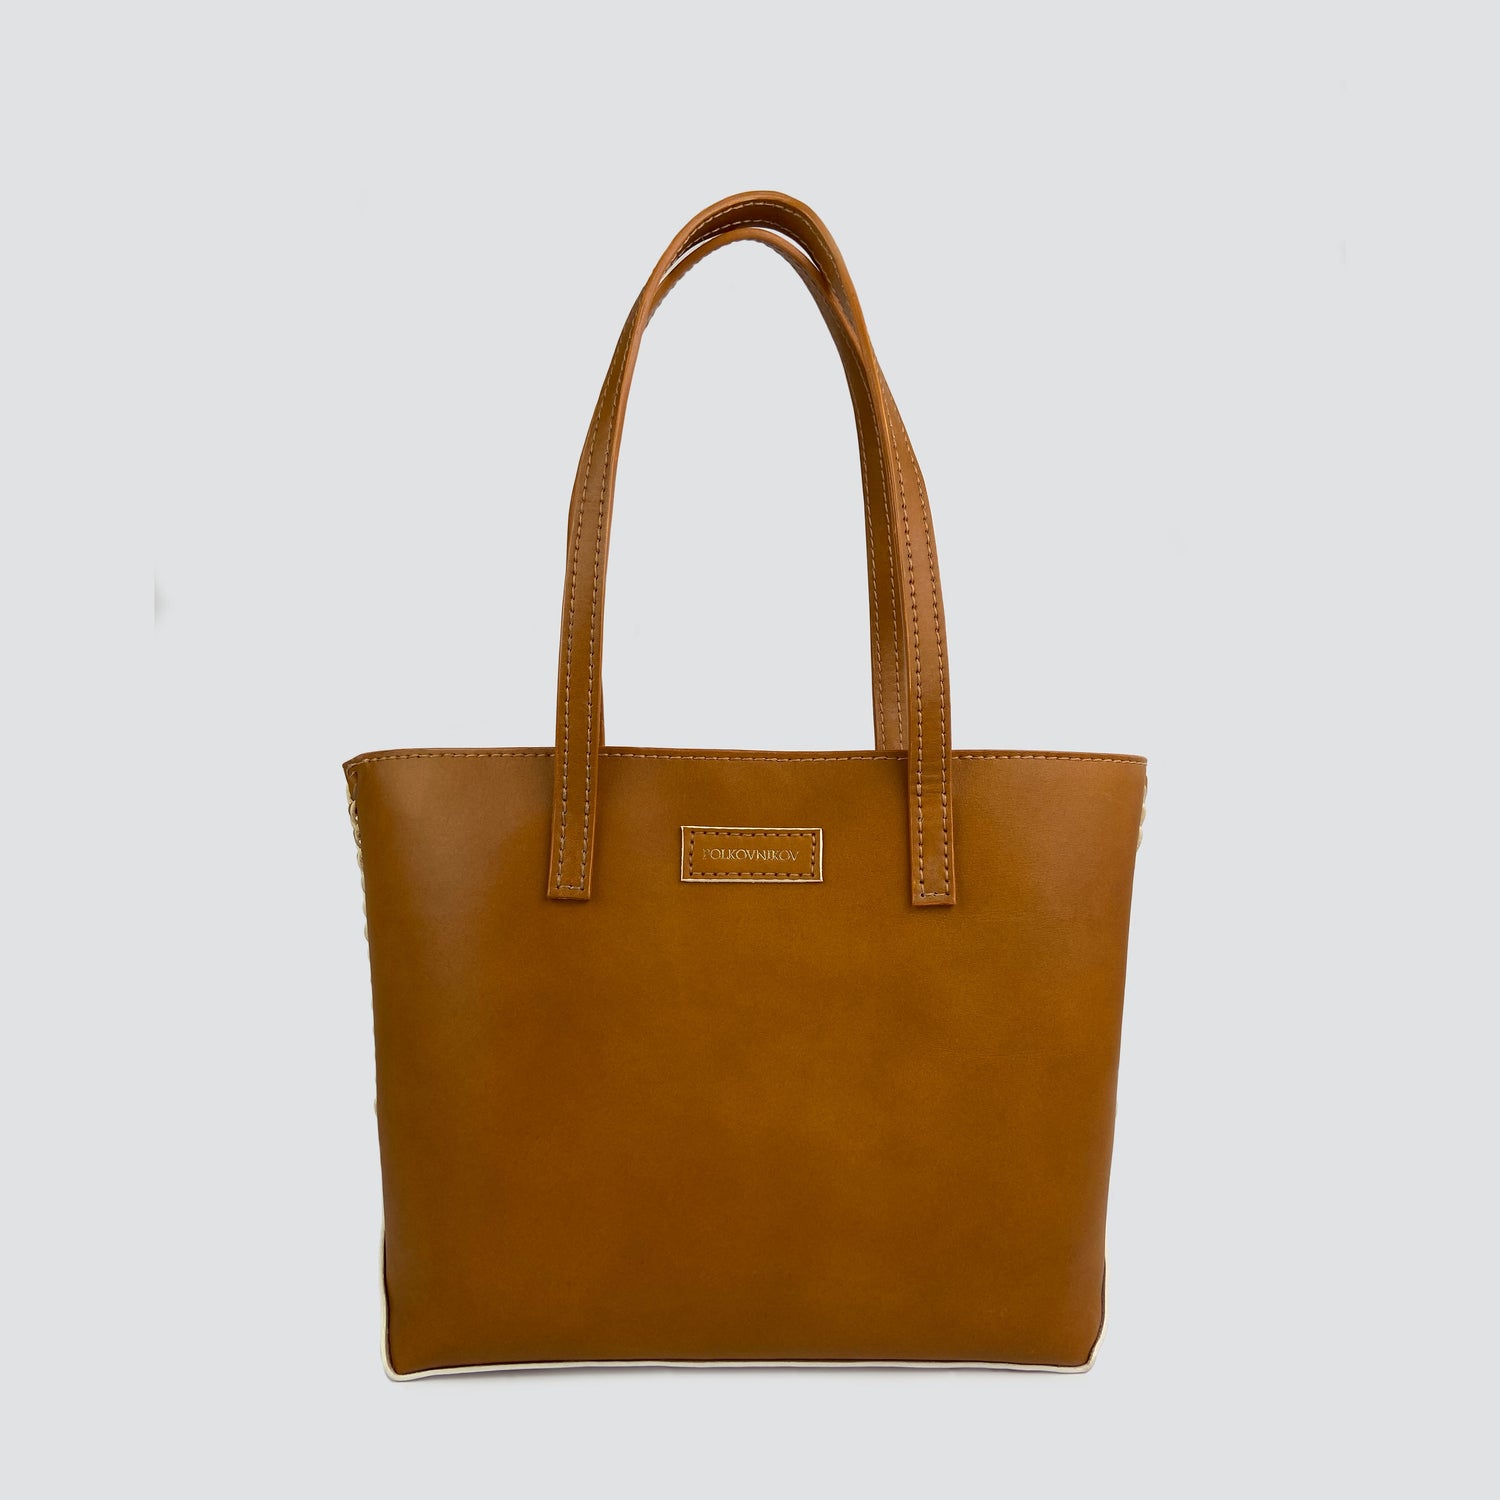 Tote Bag “Charlotte” - Orange